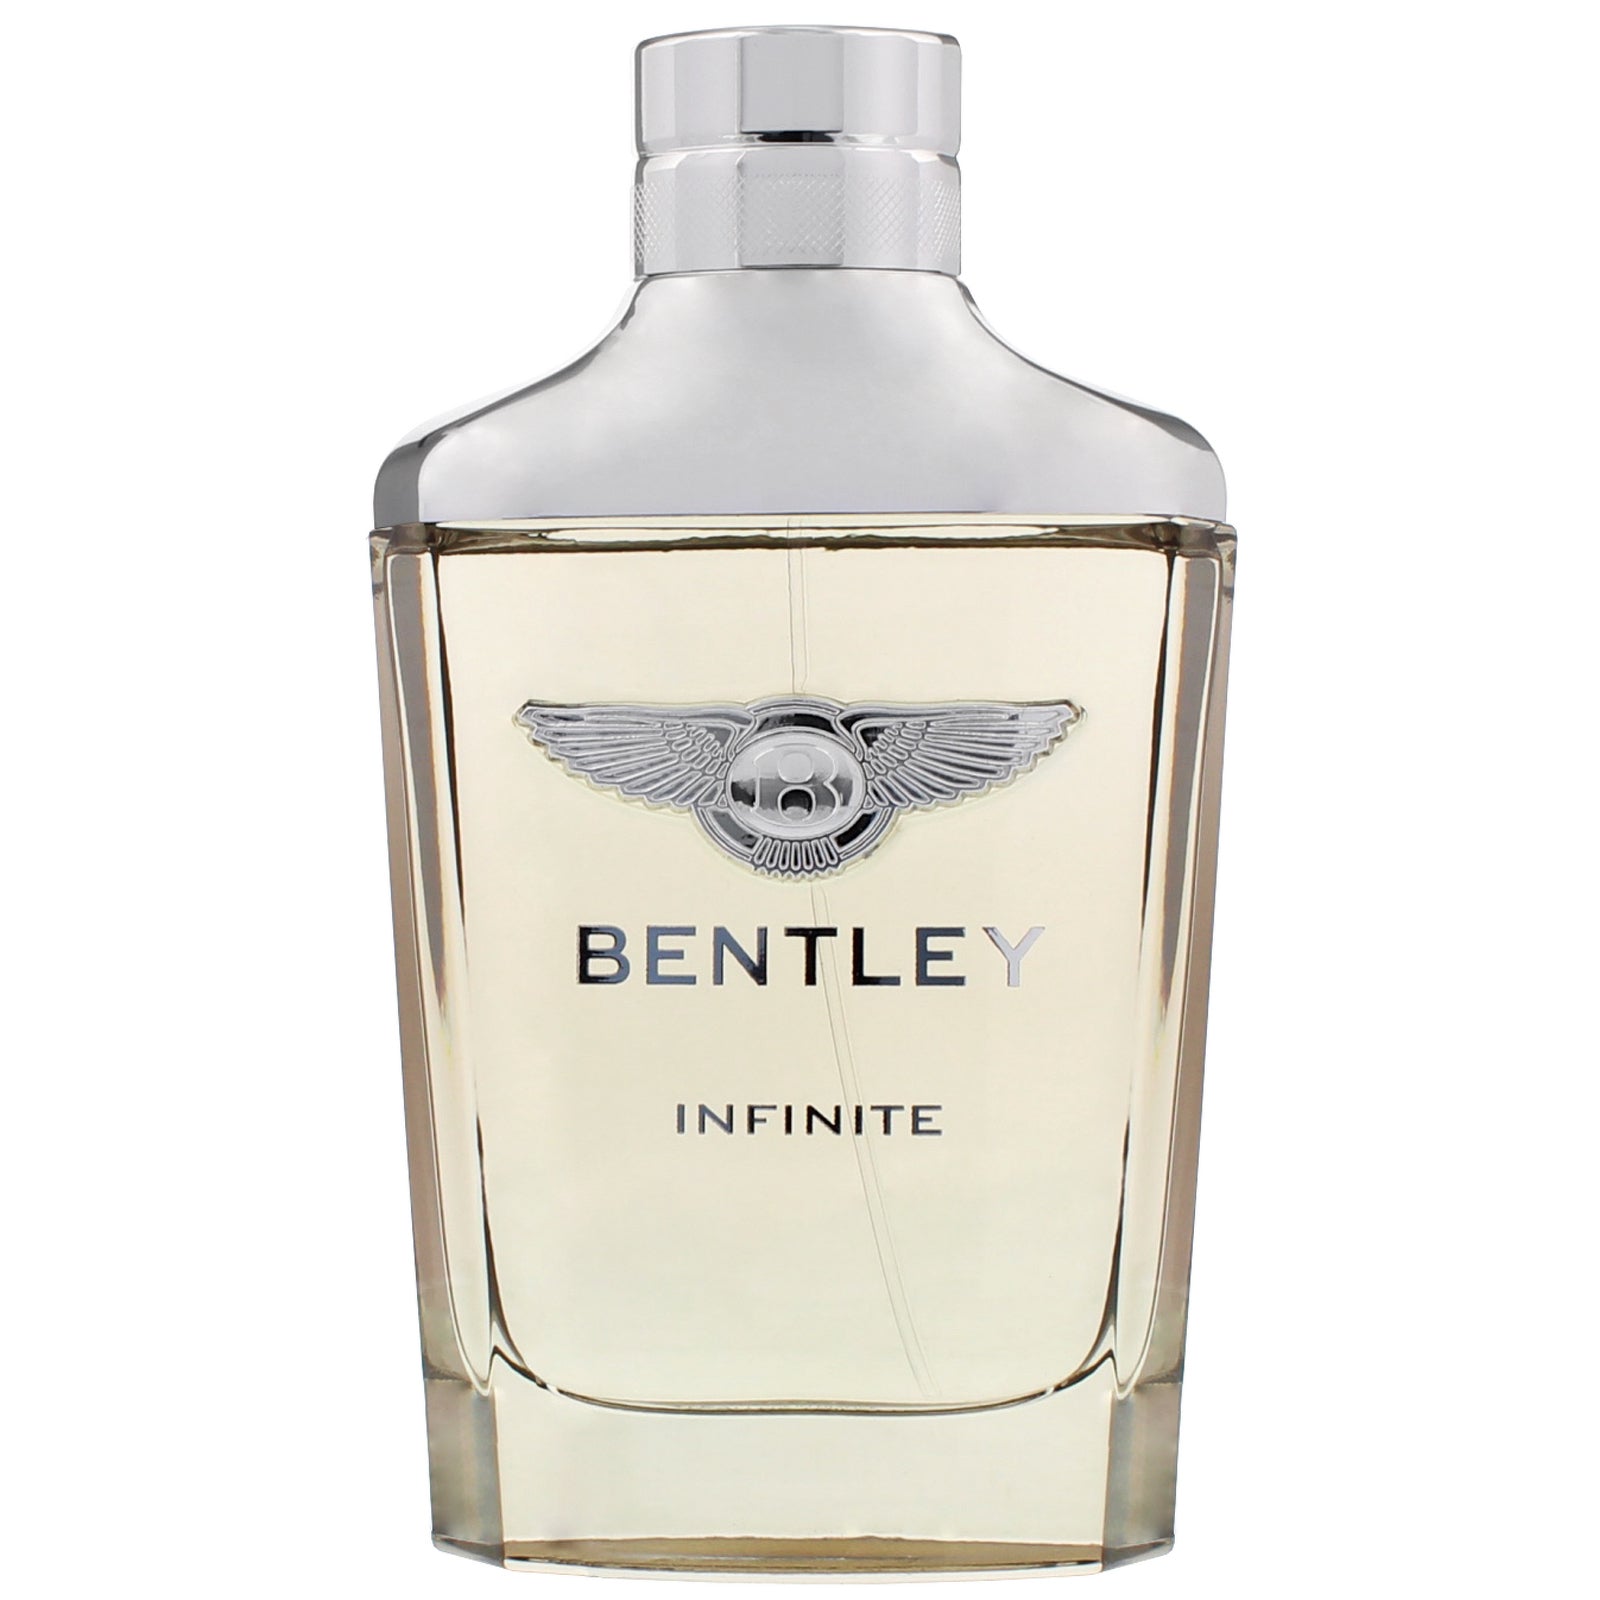 Bentley Infinite Eau de Toilette Spray 100ml - LookincredibleBentley7640163970012